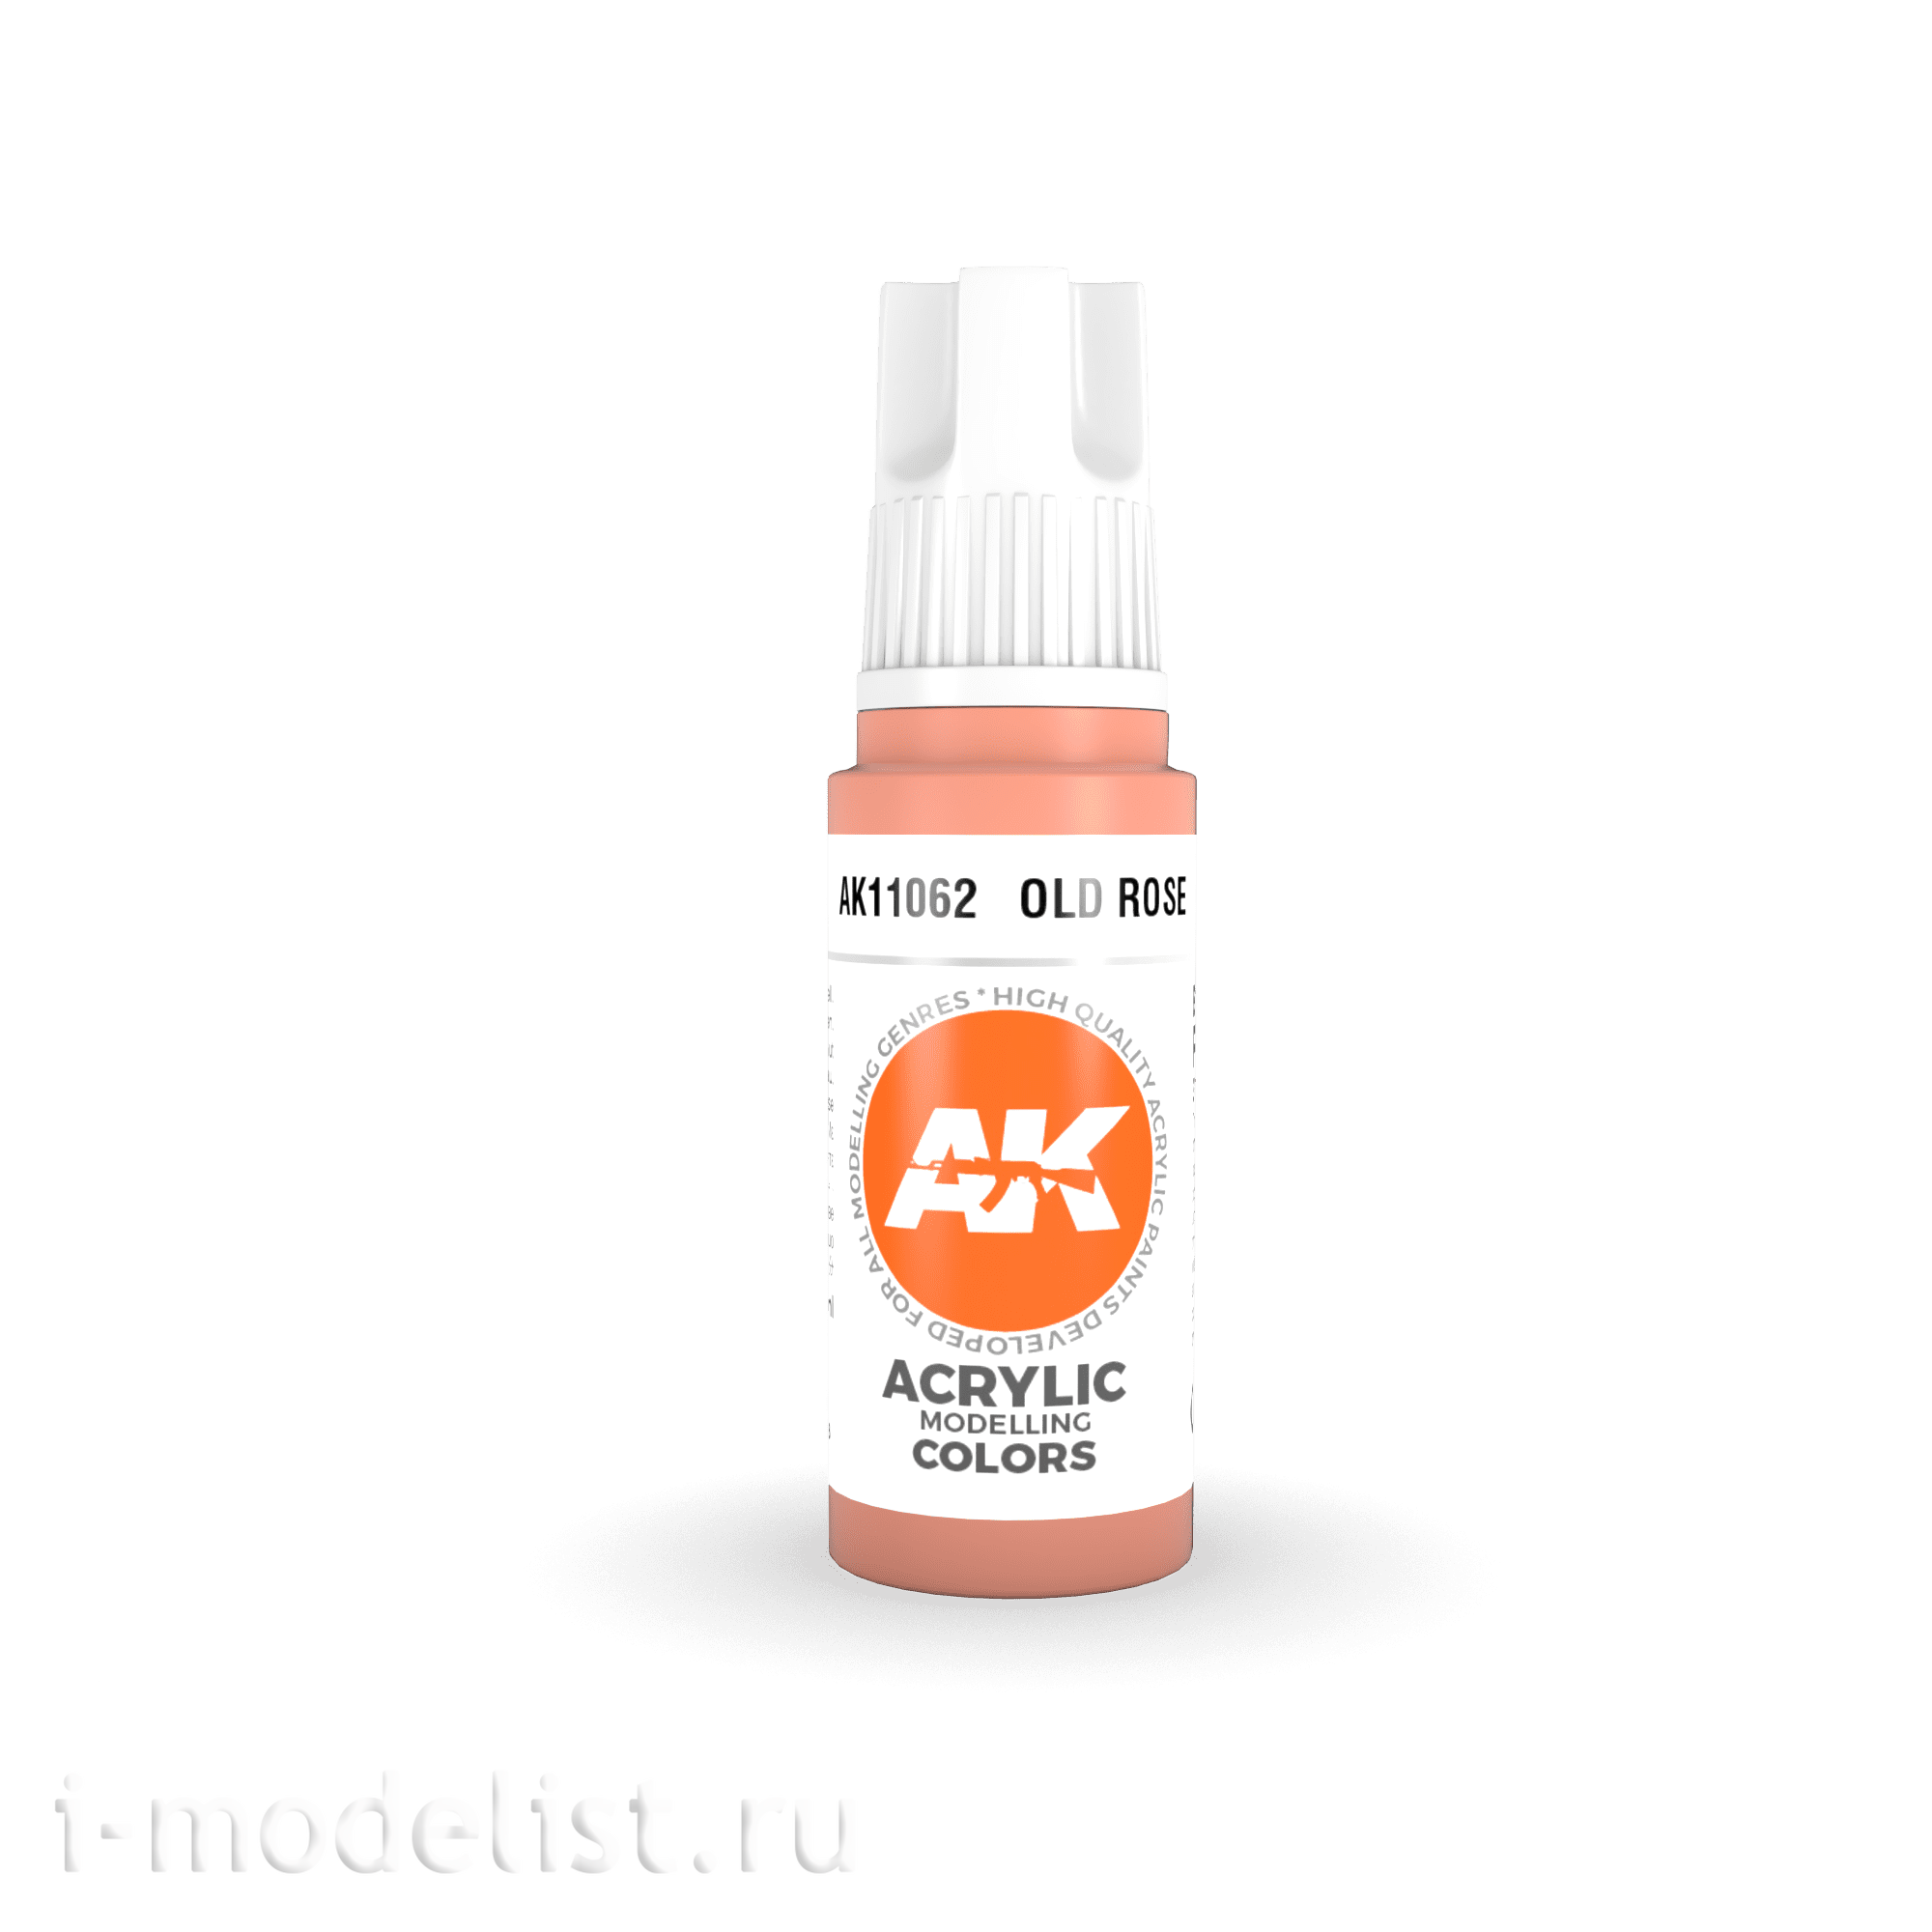 AK11062 AK Interactive acrylic Paint 3rd Generation Old Rose 17ml